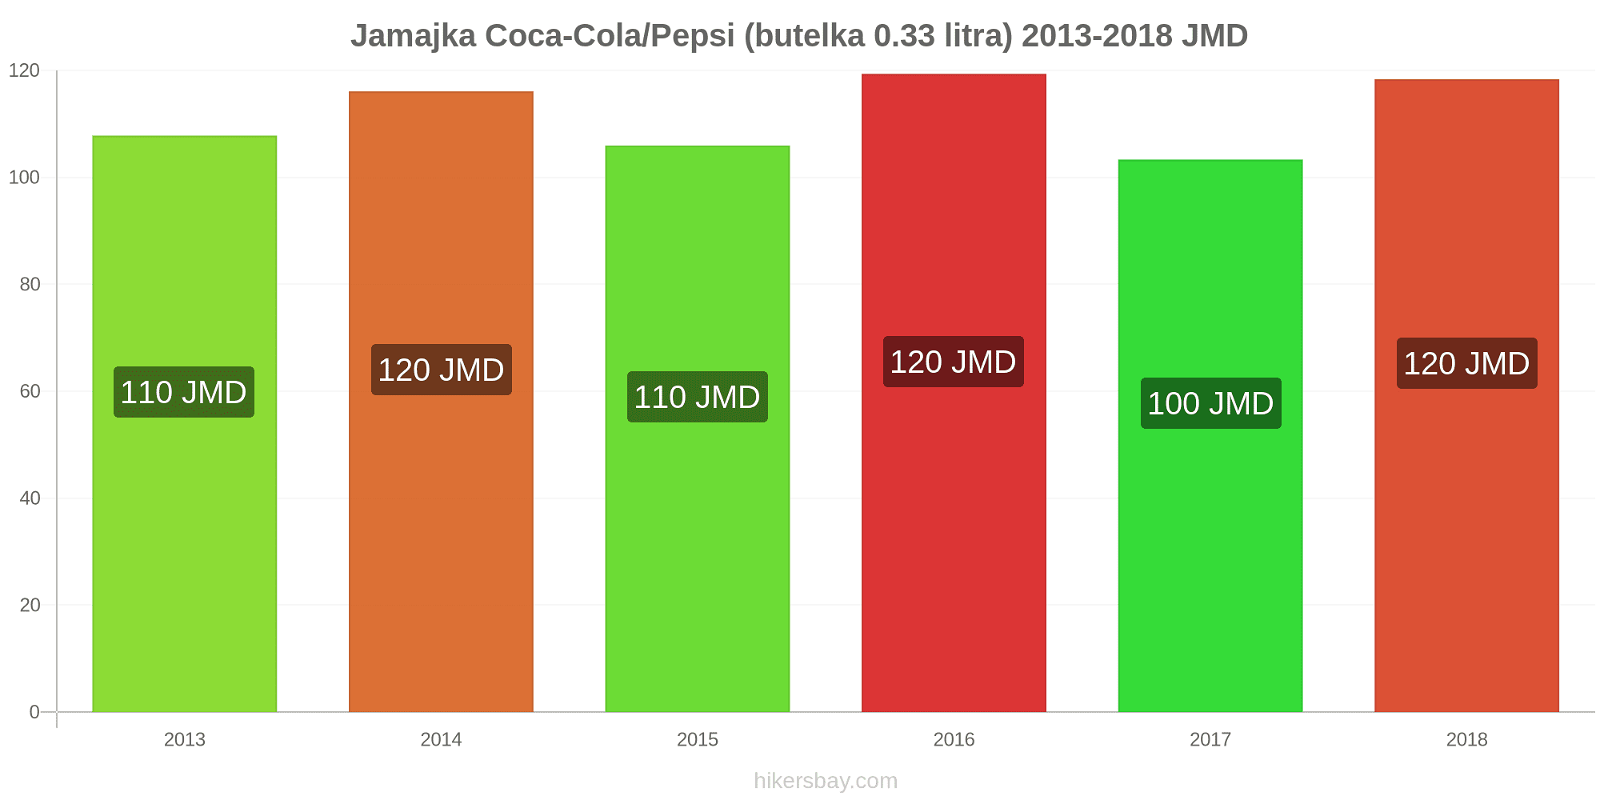 Jamajka zmiany cen Coca-Cola/Pepsi (butelka 0.33 litra) hikersbay.com